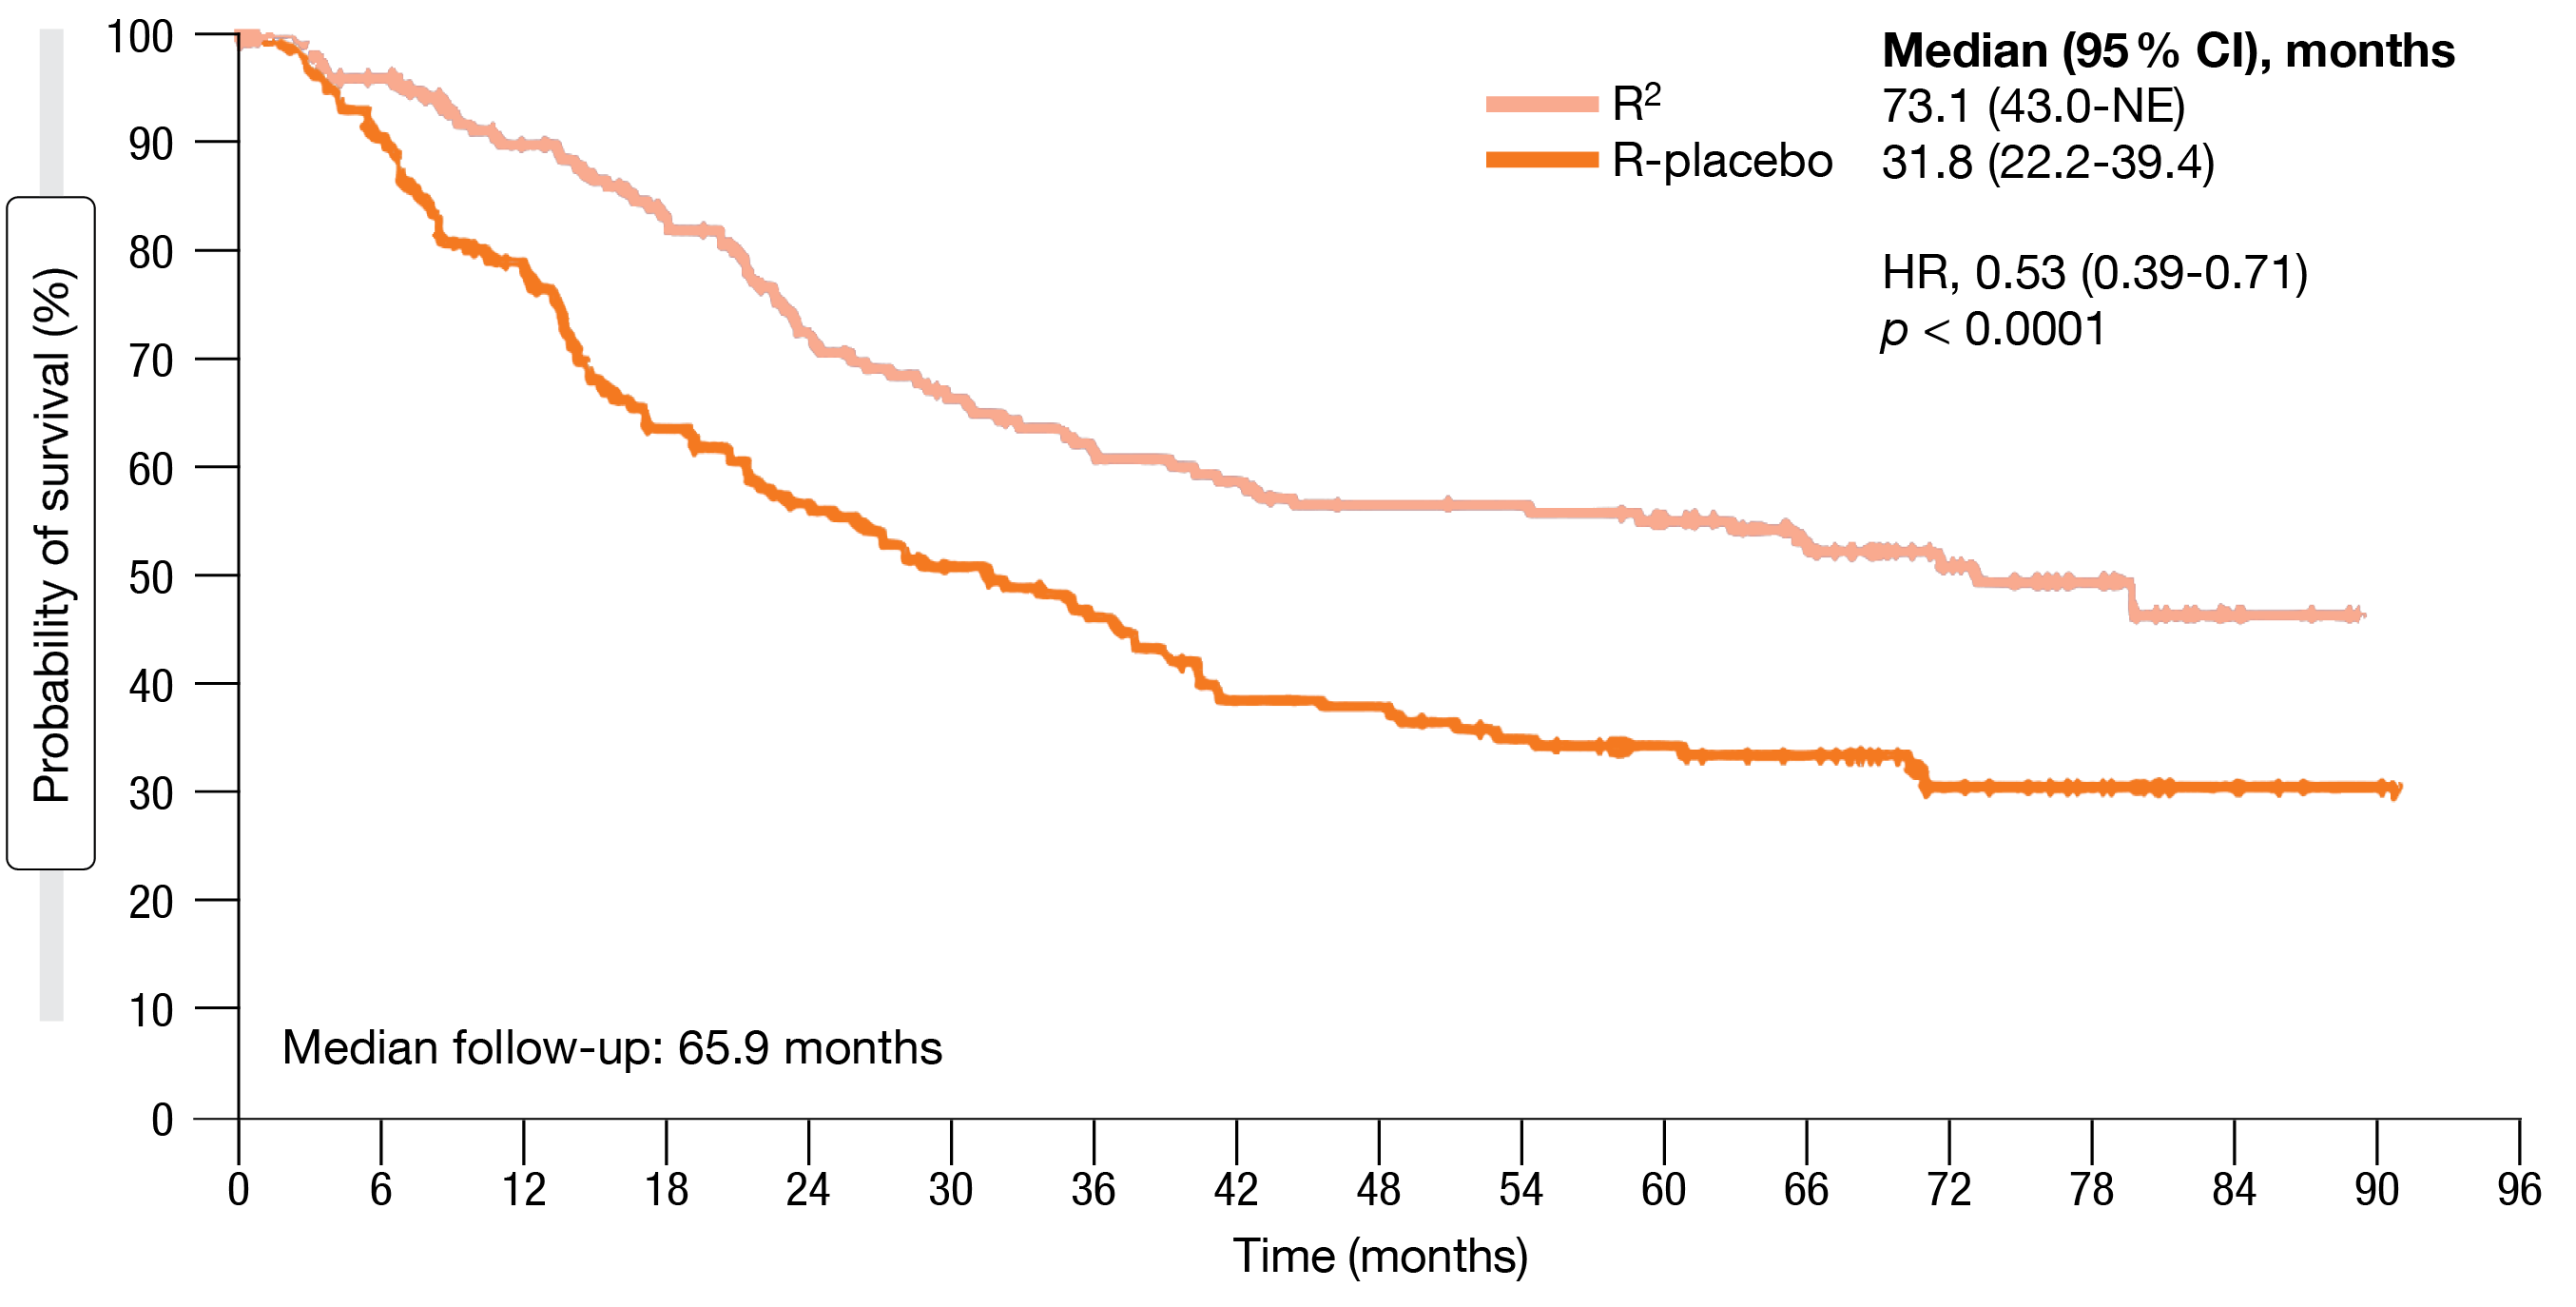 Figure 1: Time to next lymphoma treatment for R2 vs. rituximab plus placebo